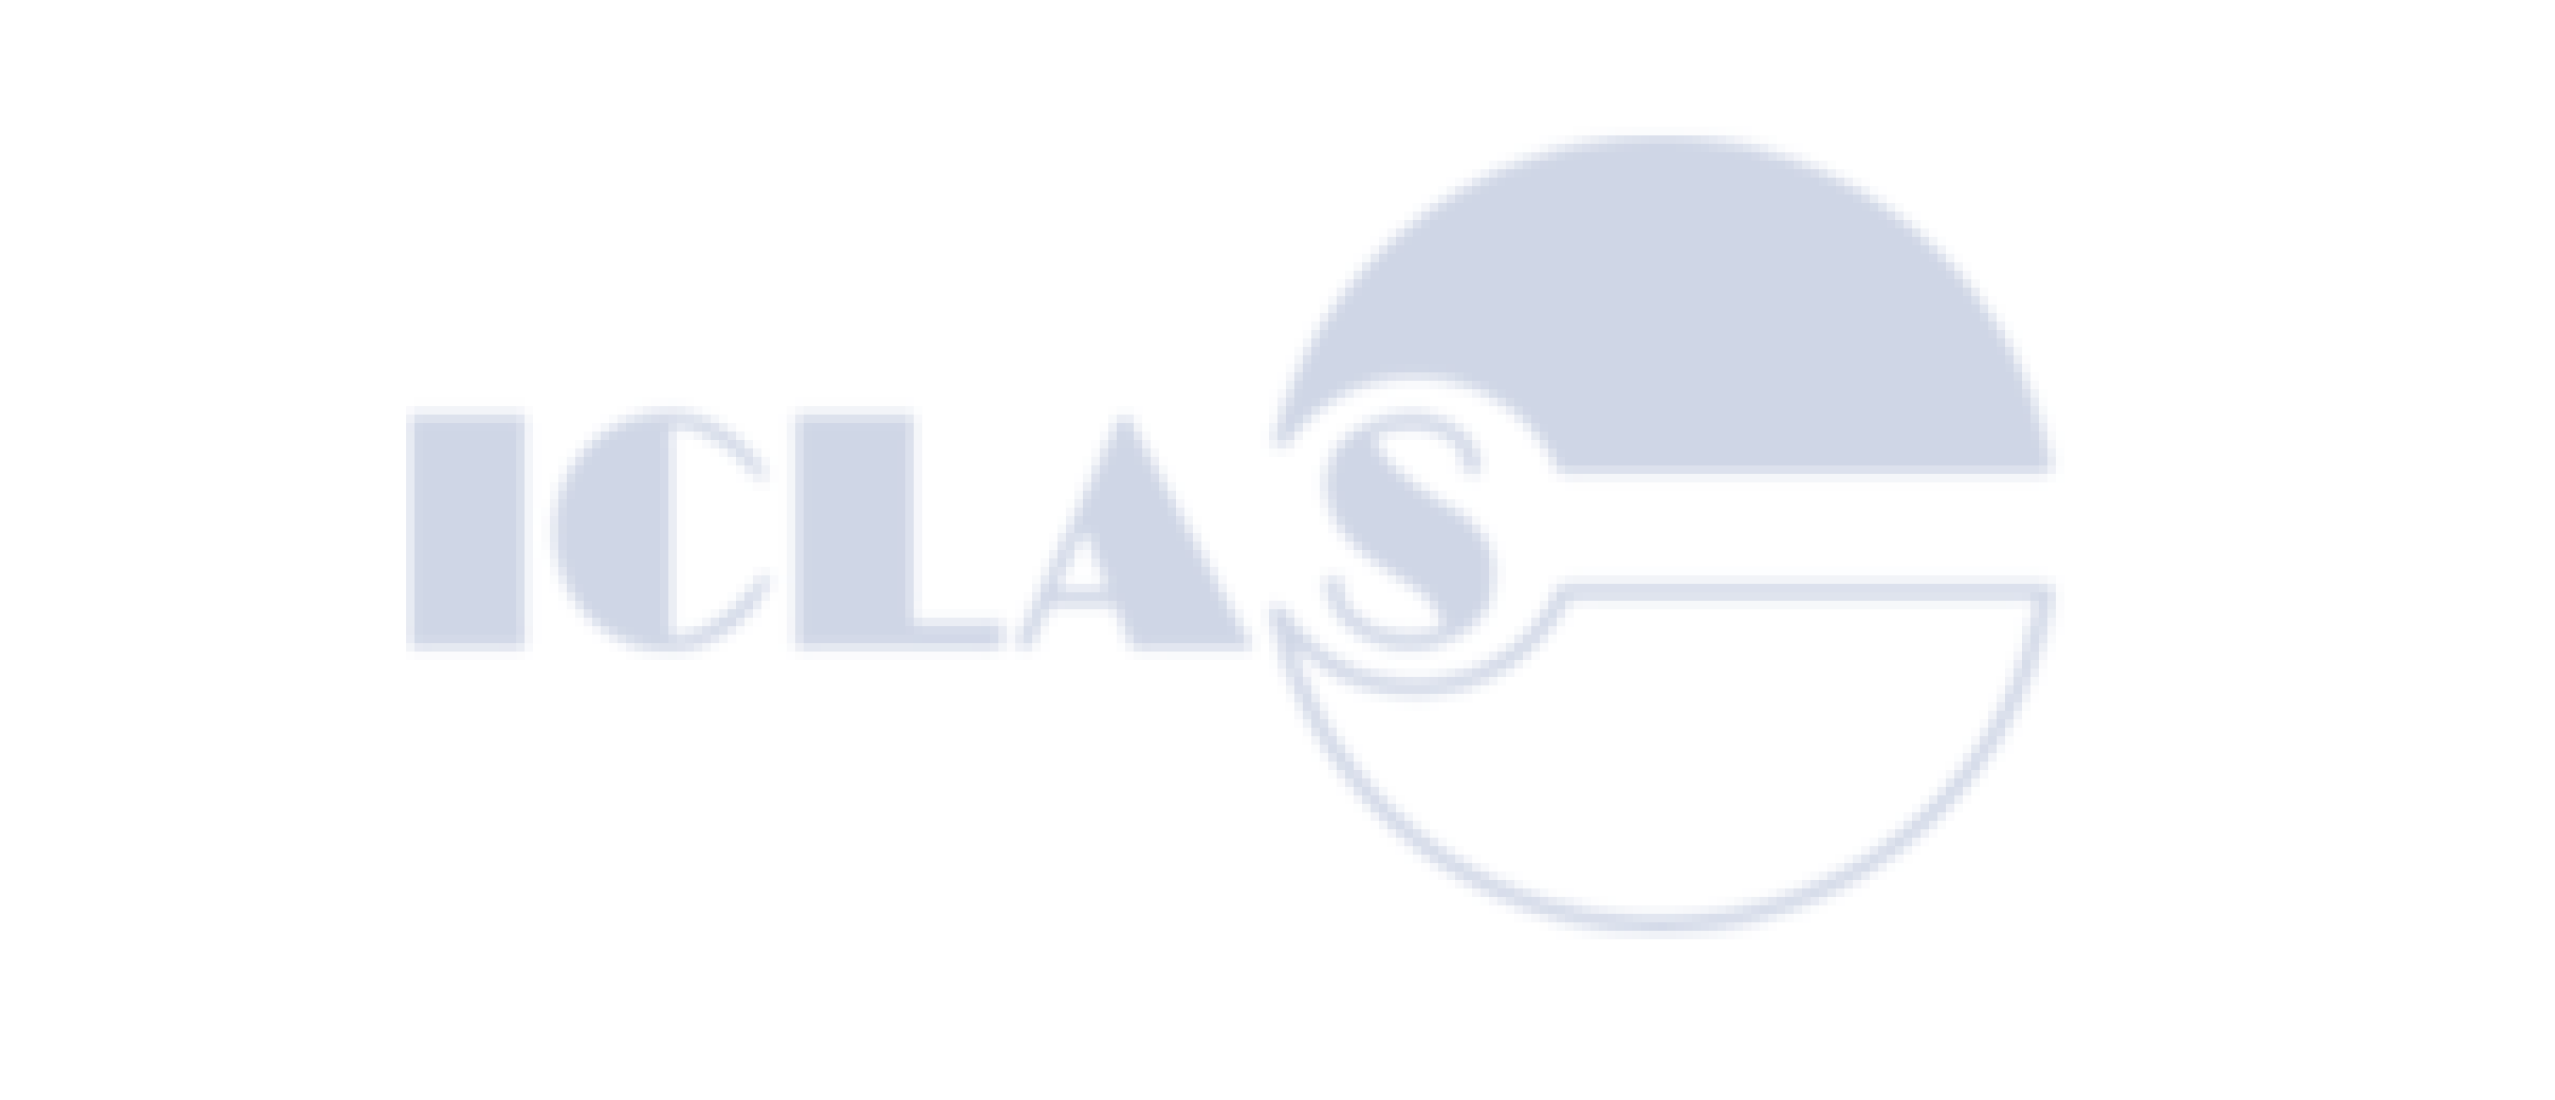 ICLAS News Report May 2022